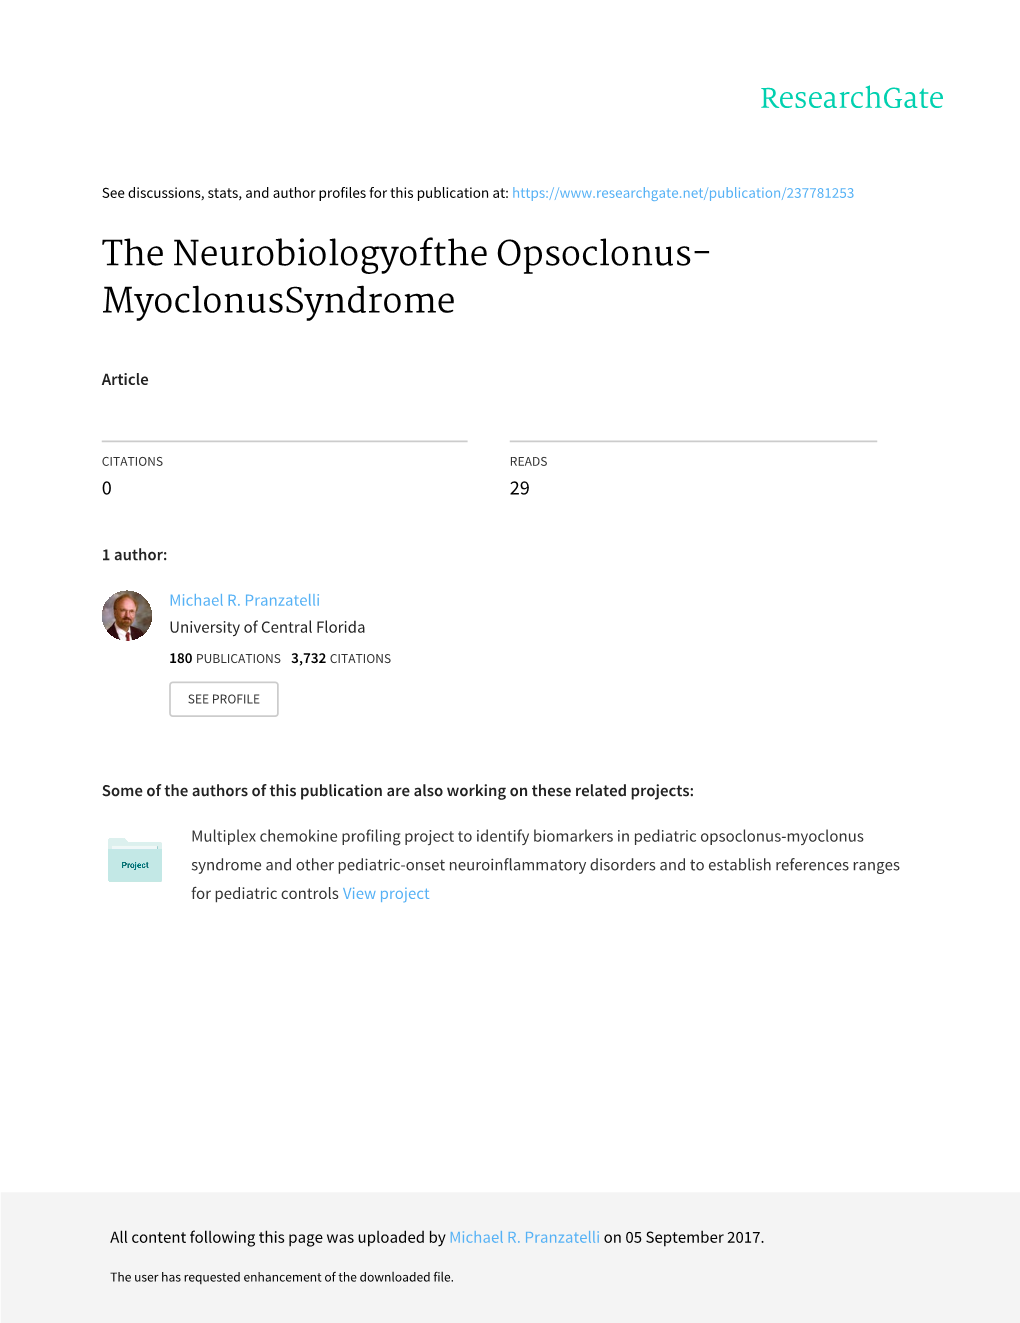 The Neurobiologyofthe Opsoclonus- Myoclonussyndrome